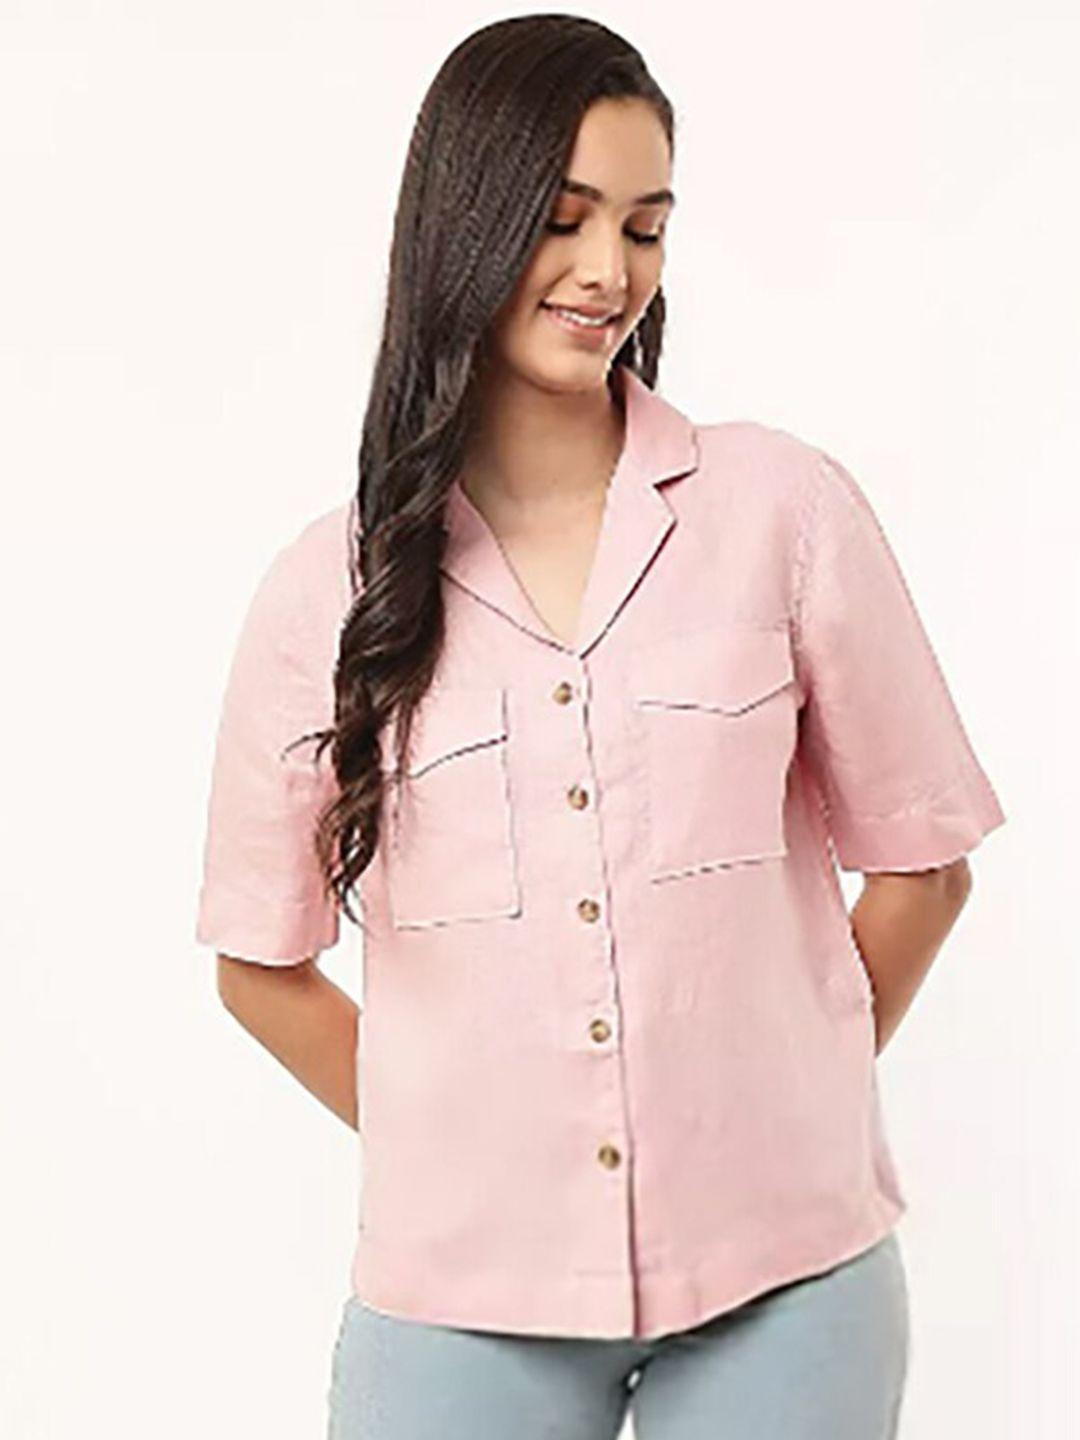 marks & spencer women pink casual shirt